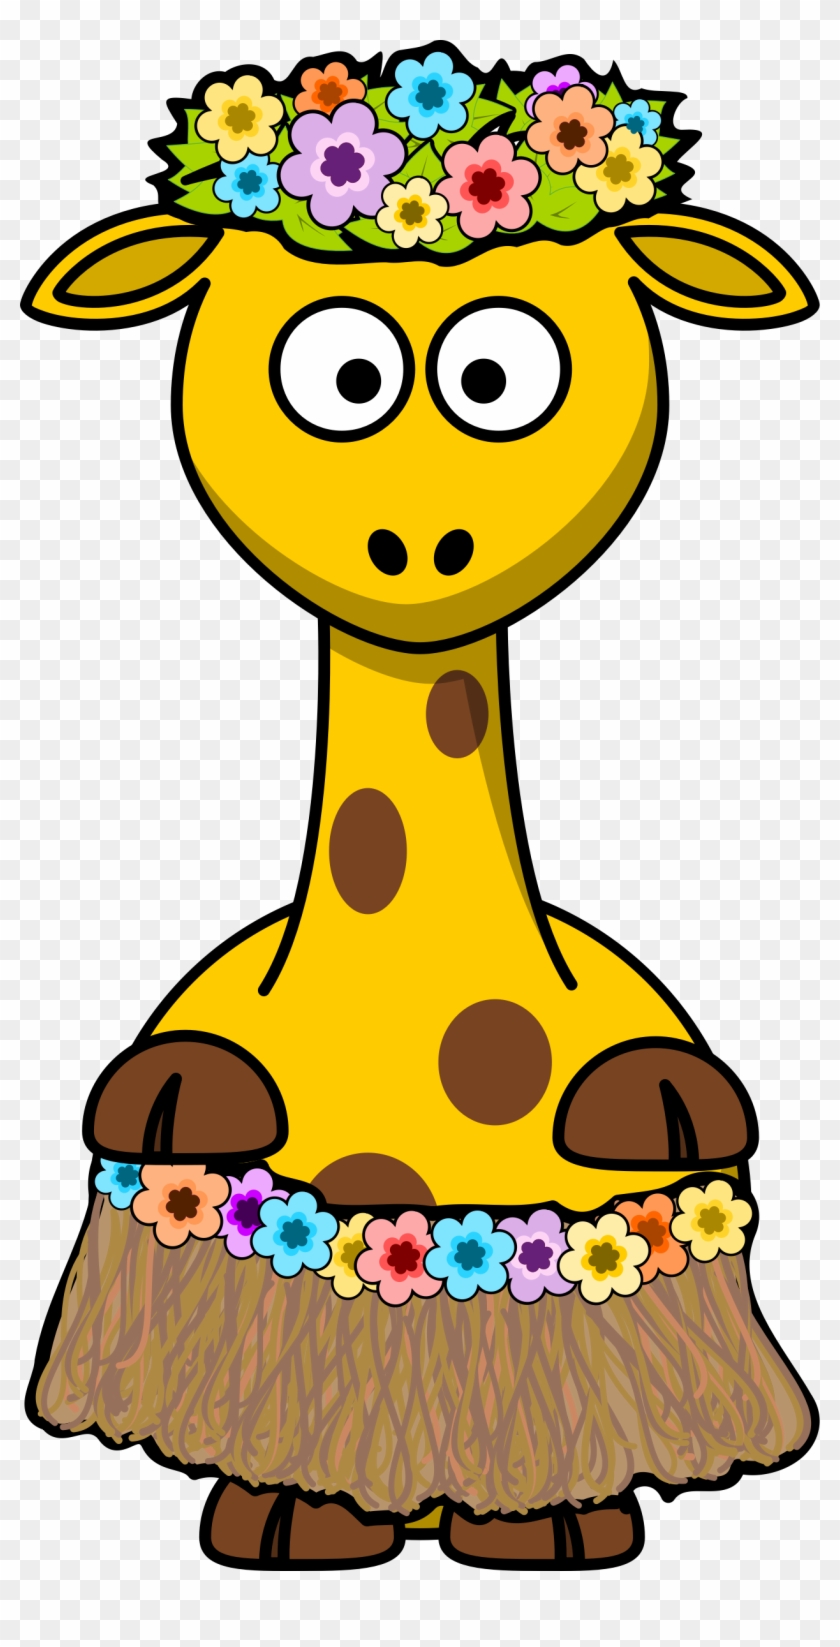 Hawaii - Cartoon Giraffe #35740